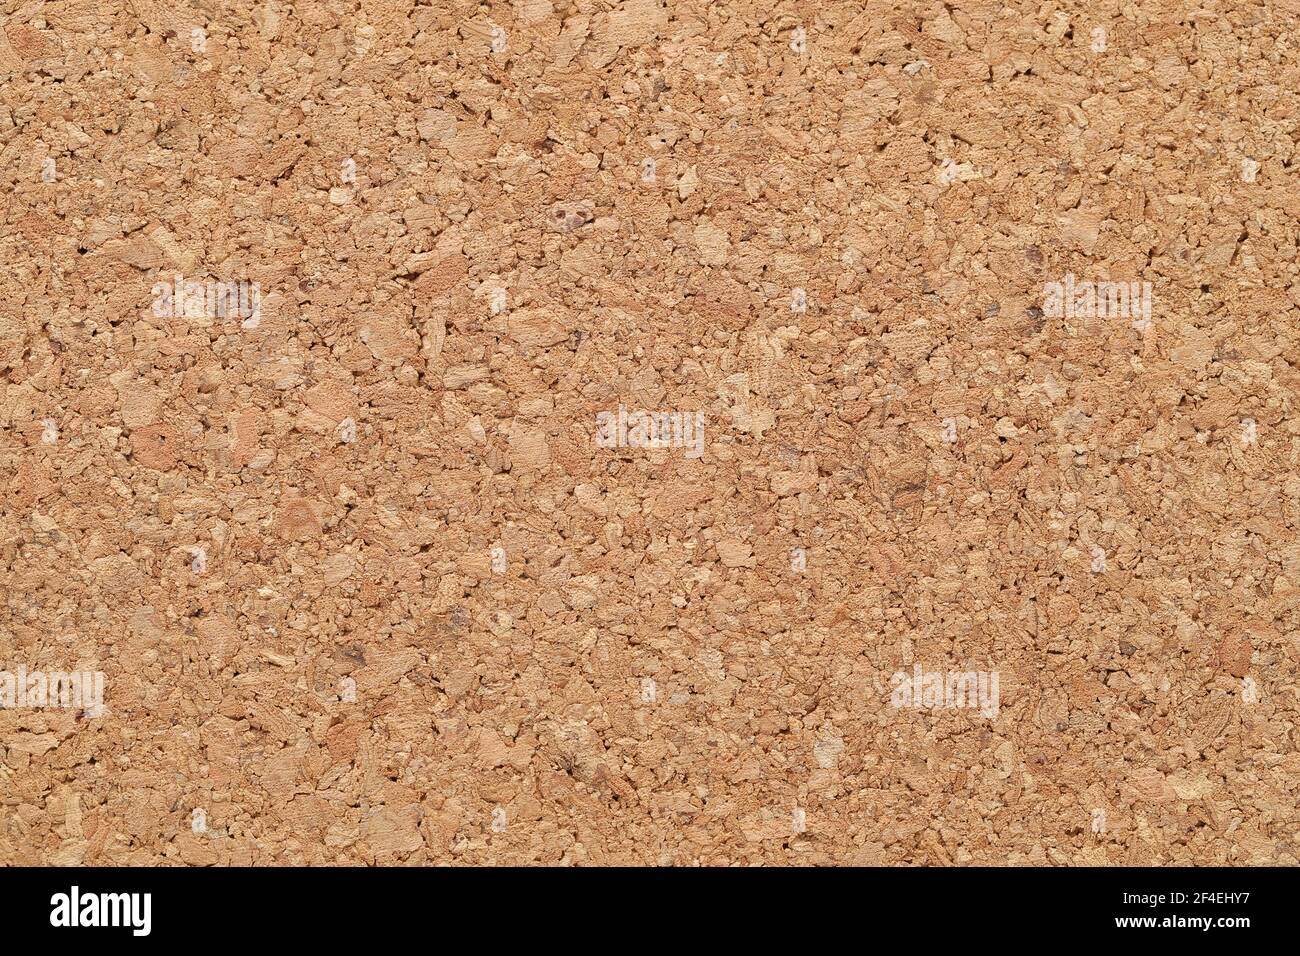 Empty blank cork board or bulletin board. Close up of corkboard texture Stock Photo